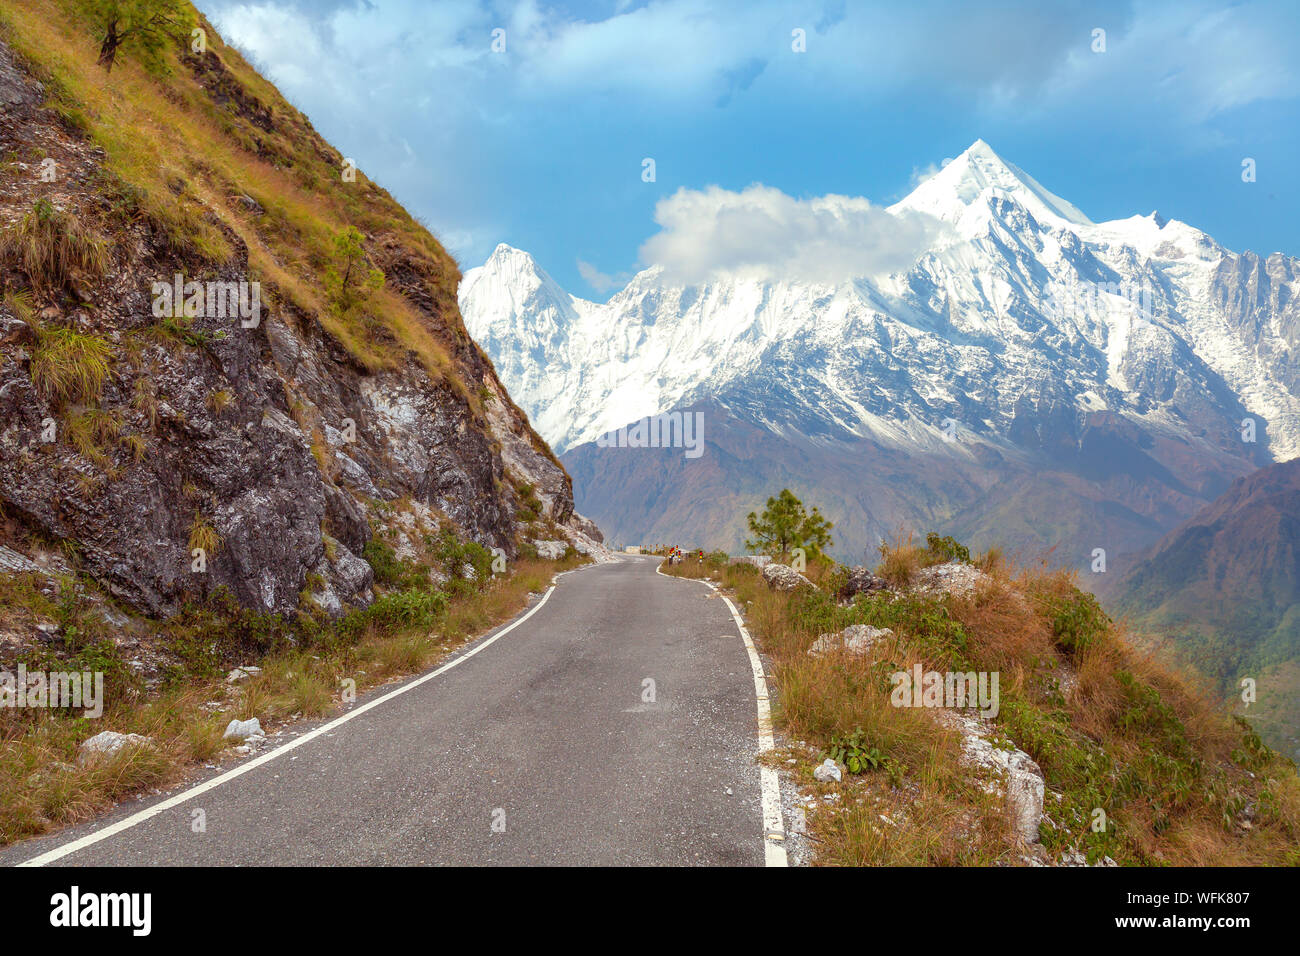 Himalaya snow peaks with scenic mountain road at Uttarakhand India Stock Photo